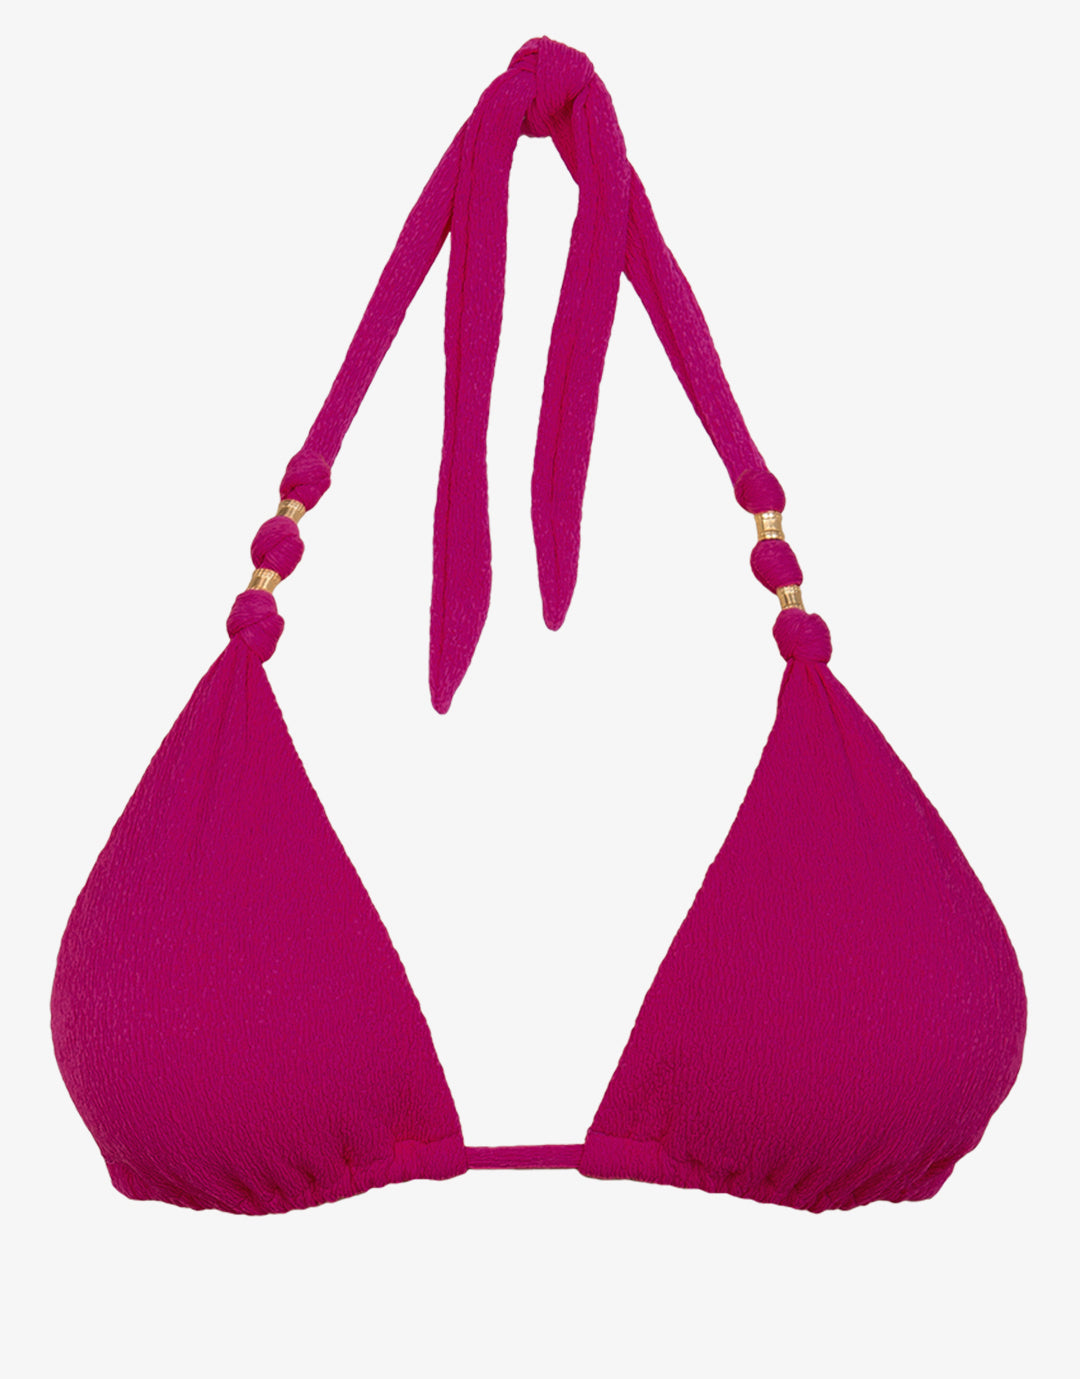 Firenze Paula Tri Bikini Top - Pink - Simply Beach UK